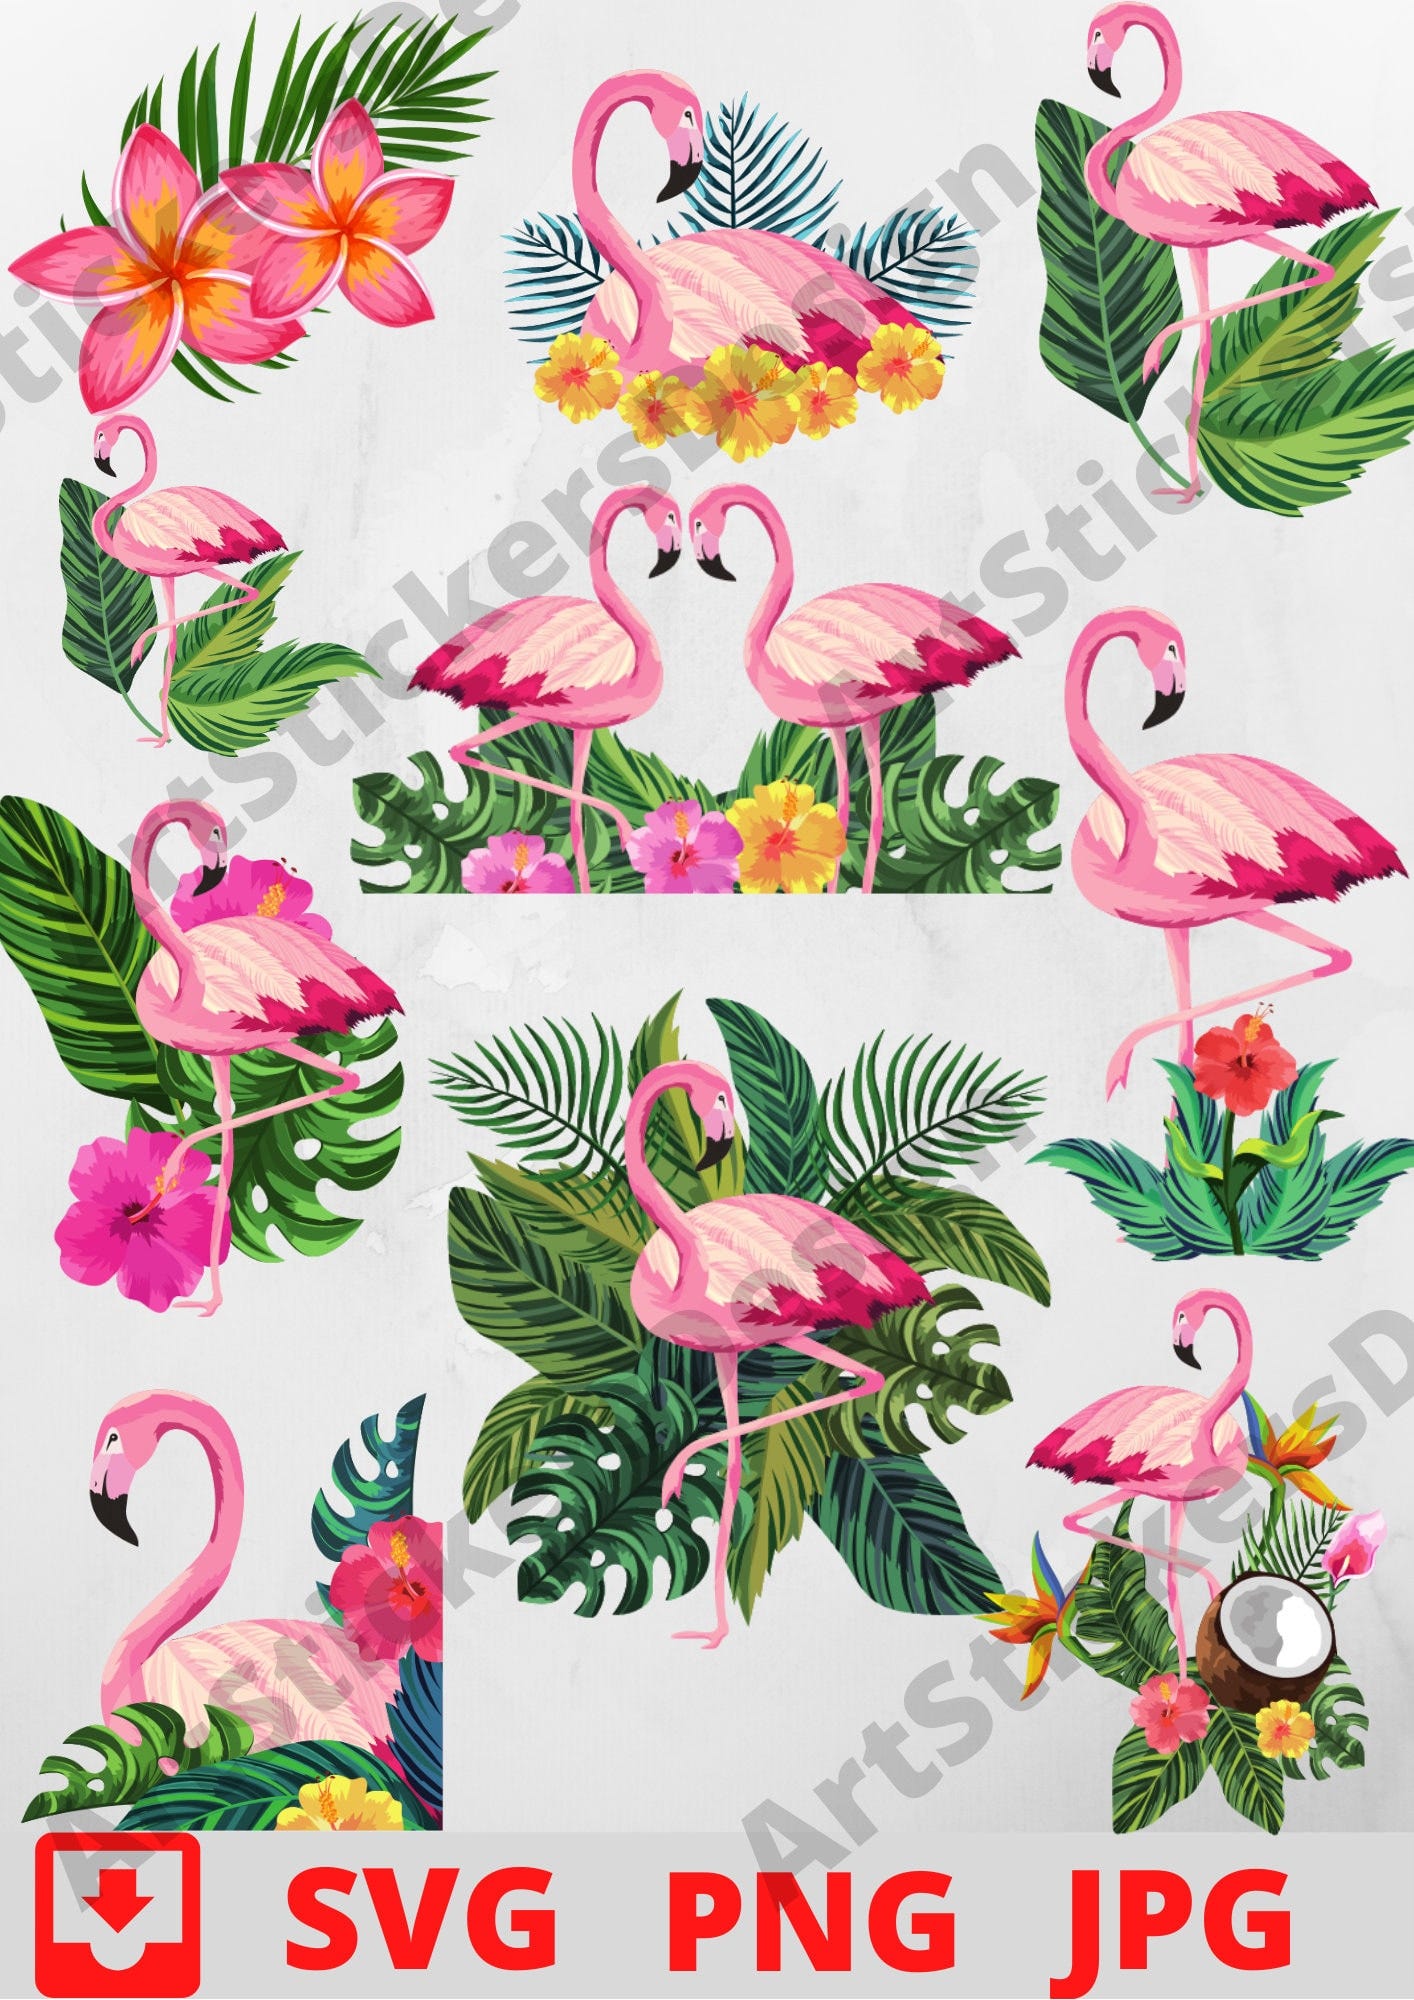 Flamingo SVG | Flamingo Clip Art | Pink Flamingo Vector | Flamingo Silhouette | Png Jpg Files | Circut Cut Files